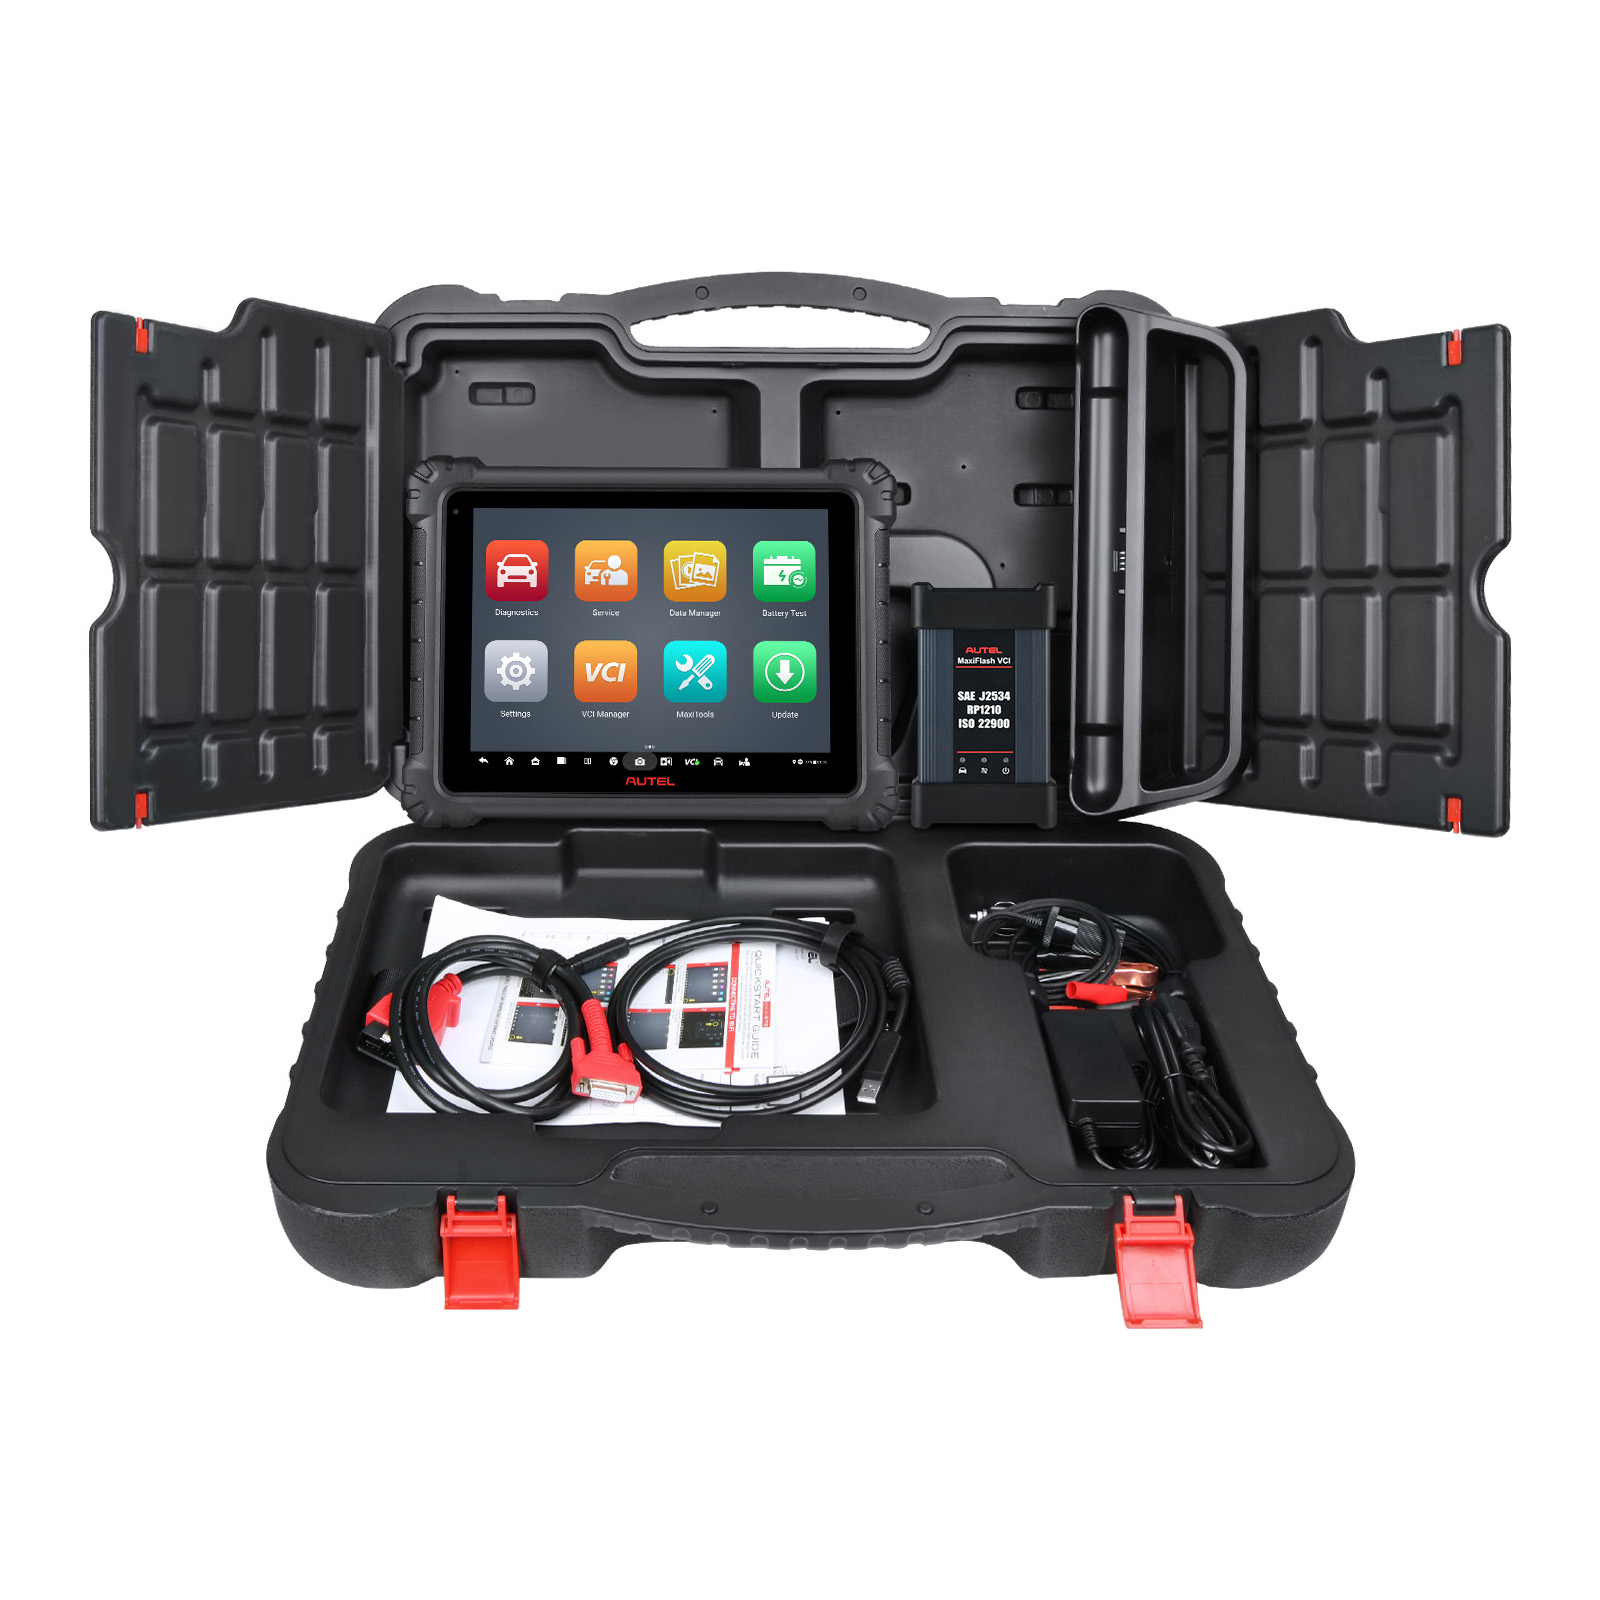 New Arrival Autel MaxiSYS Ultra Best Auto Diagnostic Scanner 